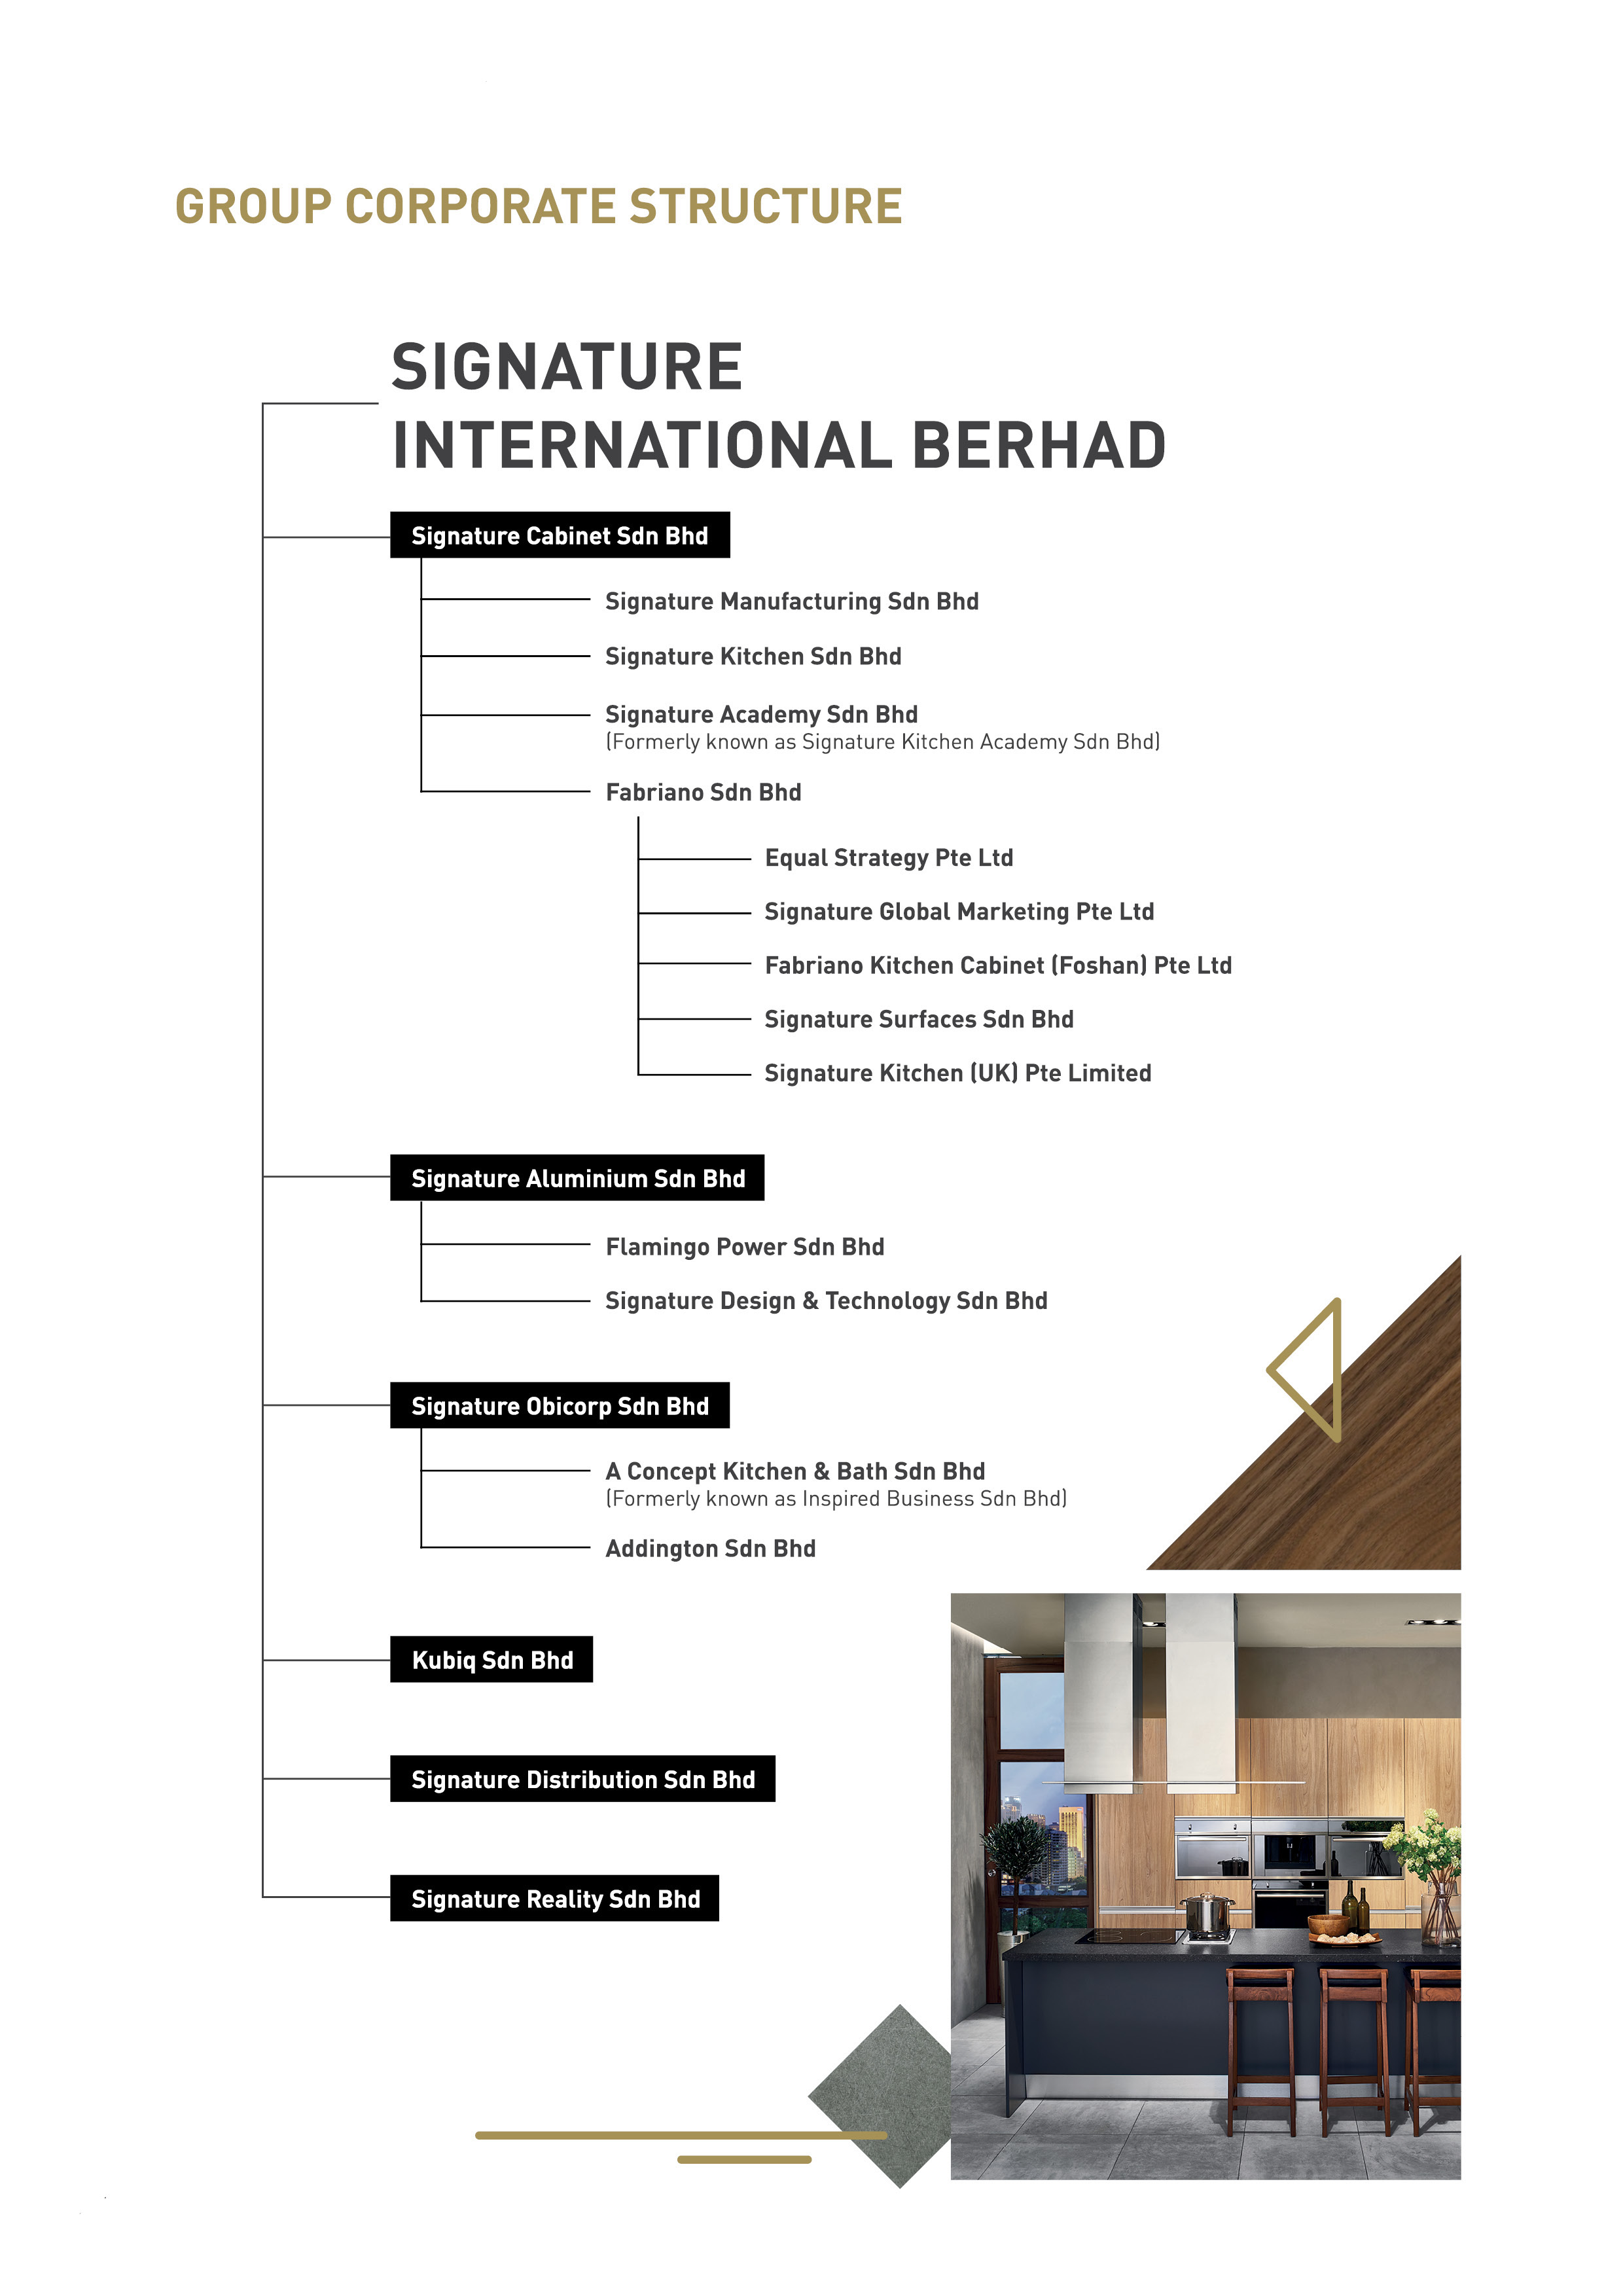 Corporate Structure Information Signature International Berhad